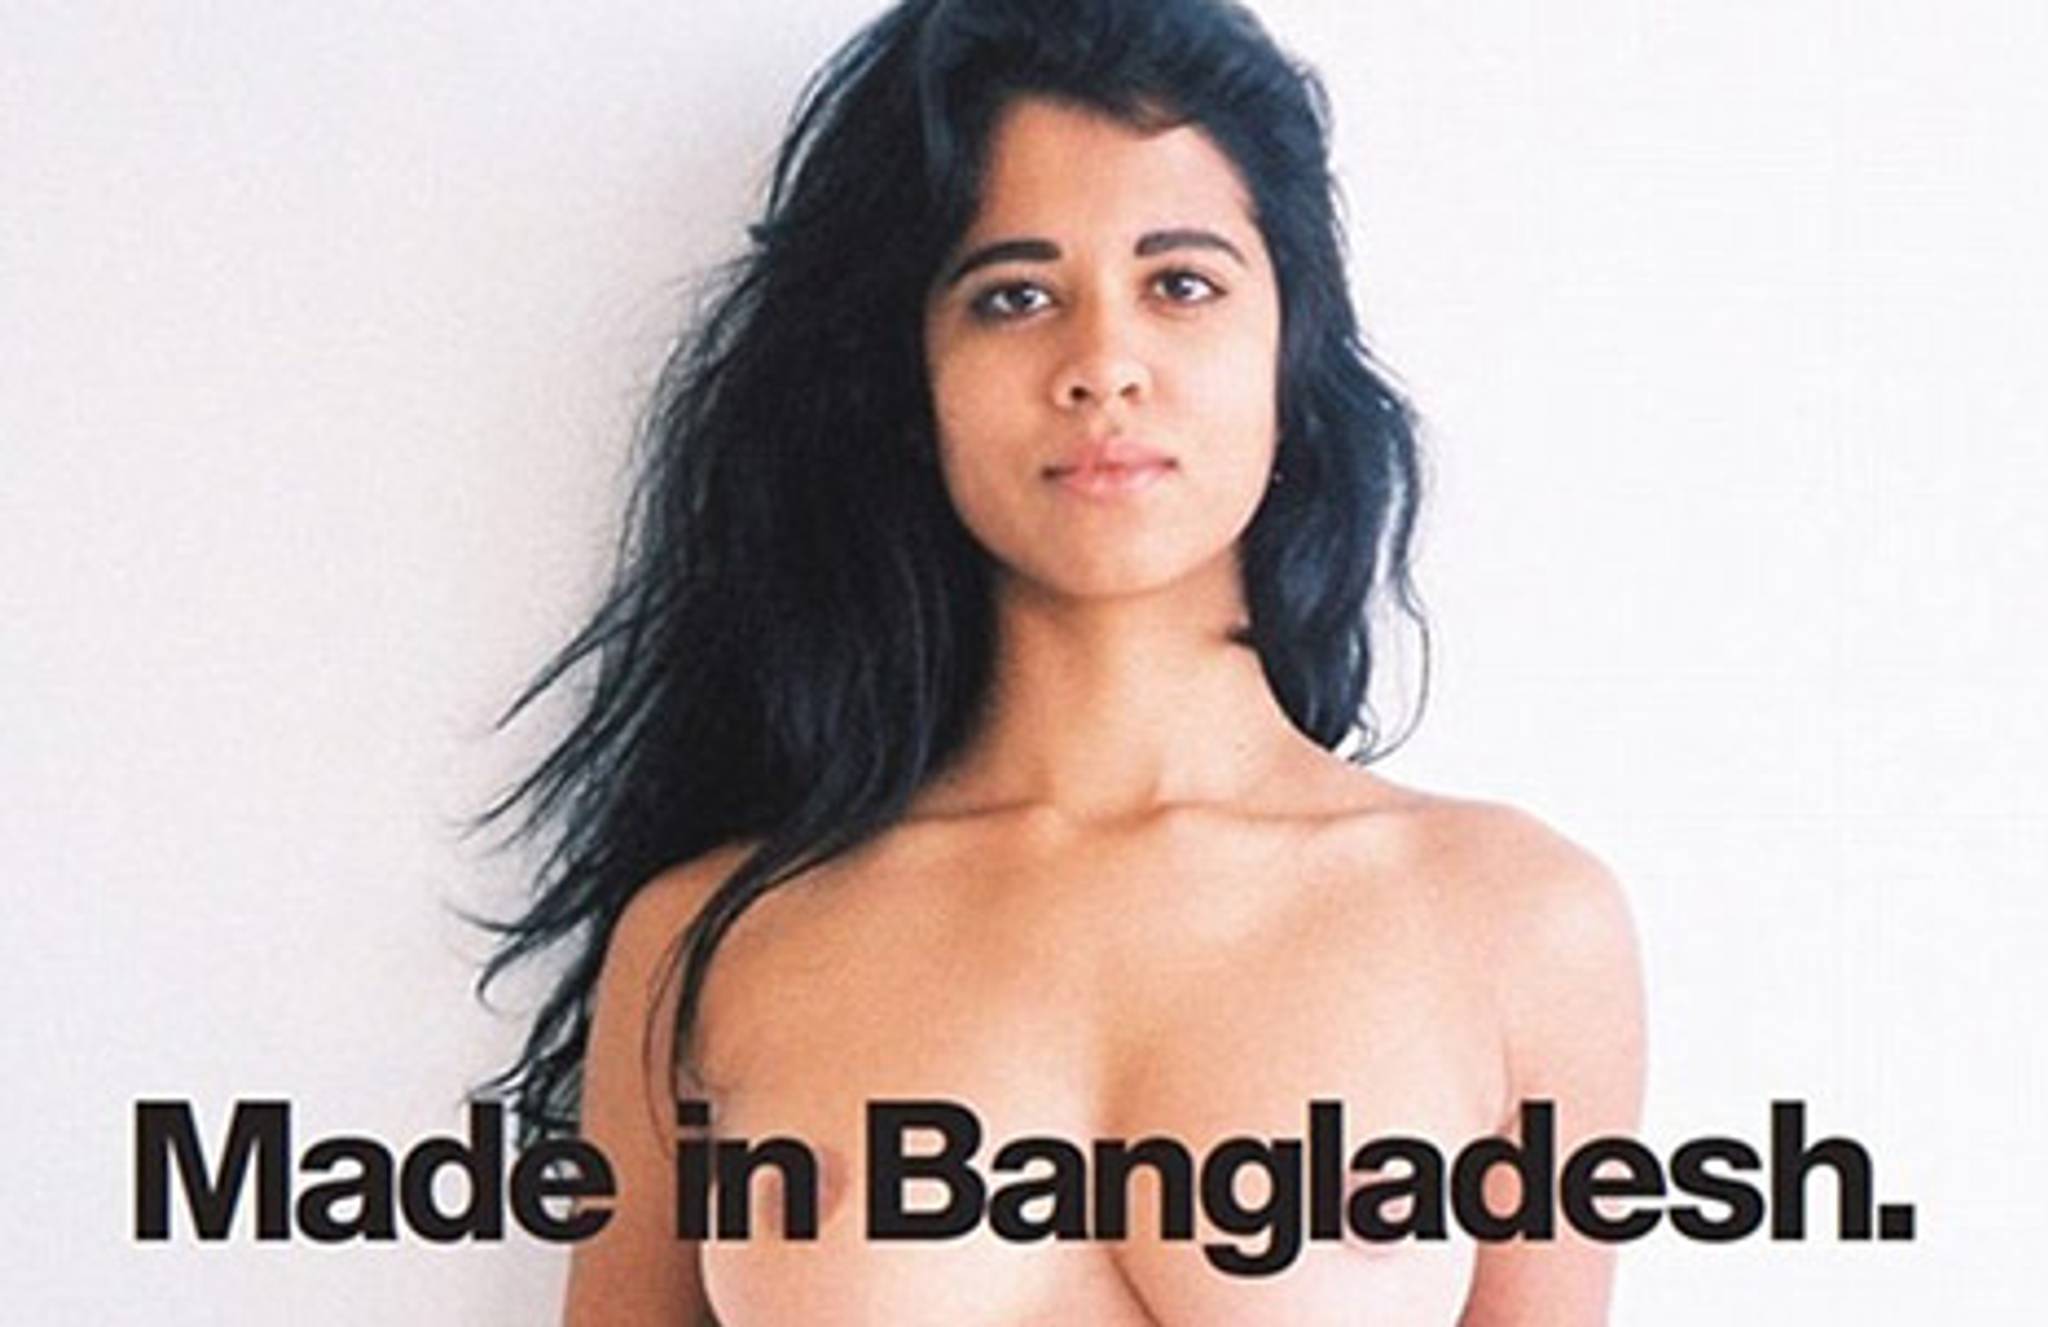 'Made in Bangladesh'